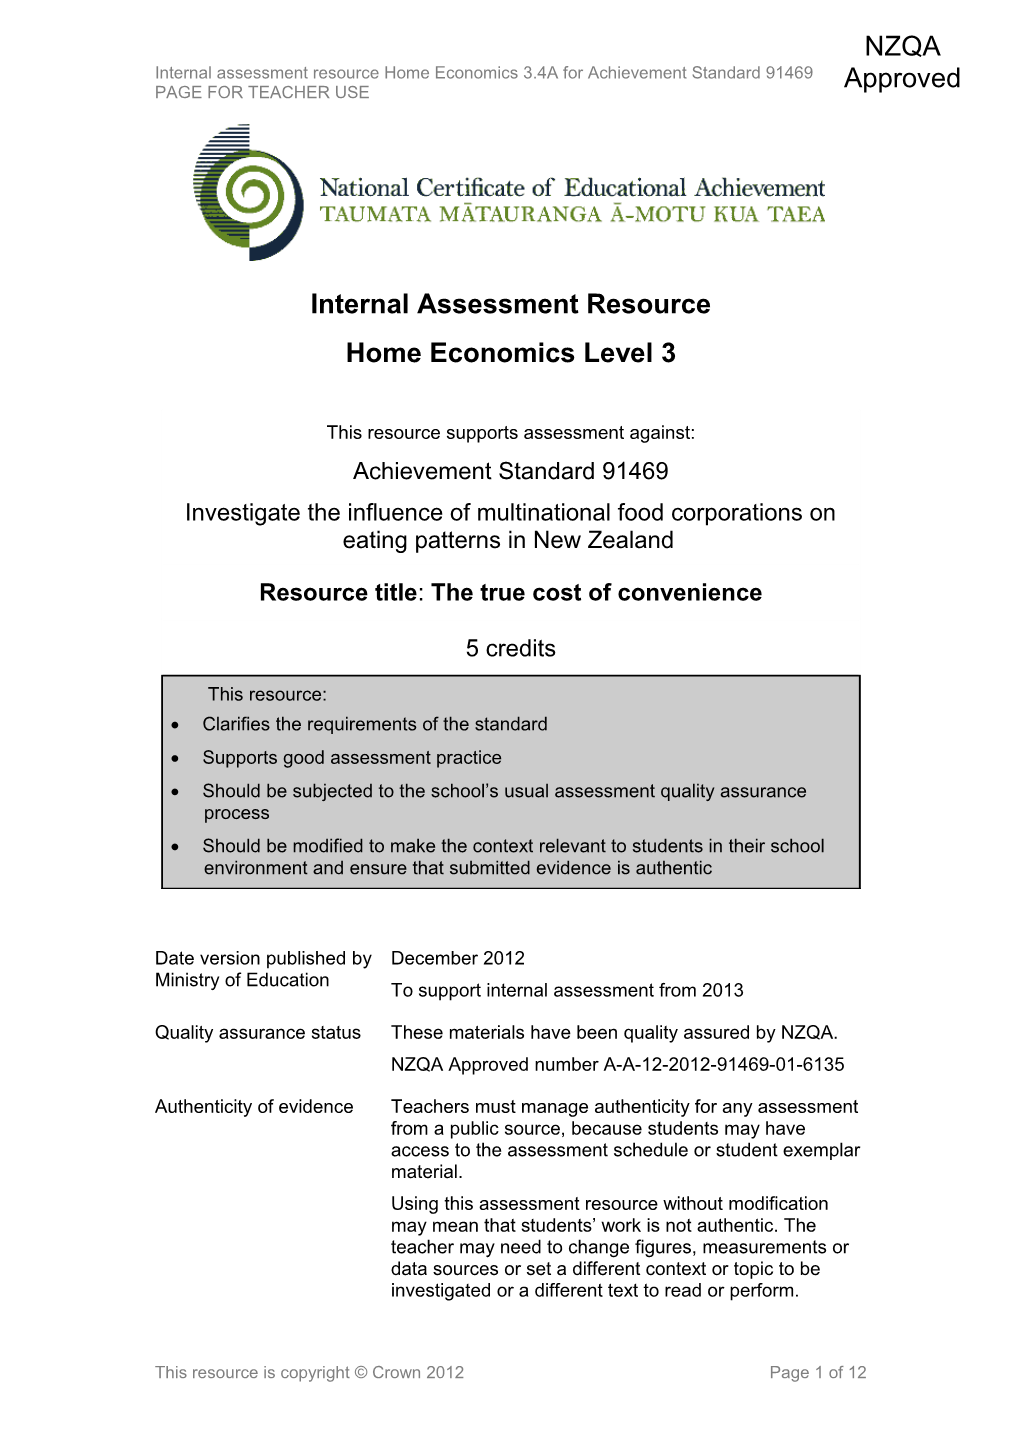 Level 3 Home Economics Internal Assessment Resource